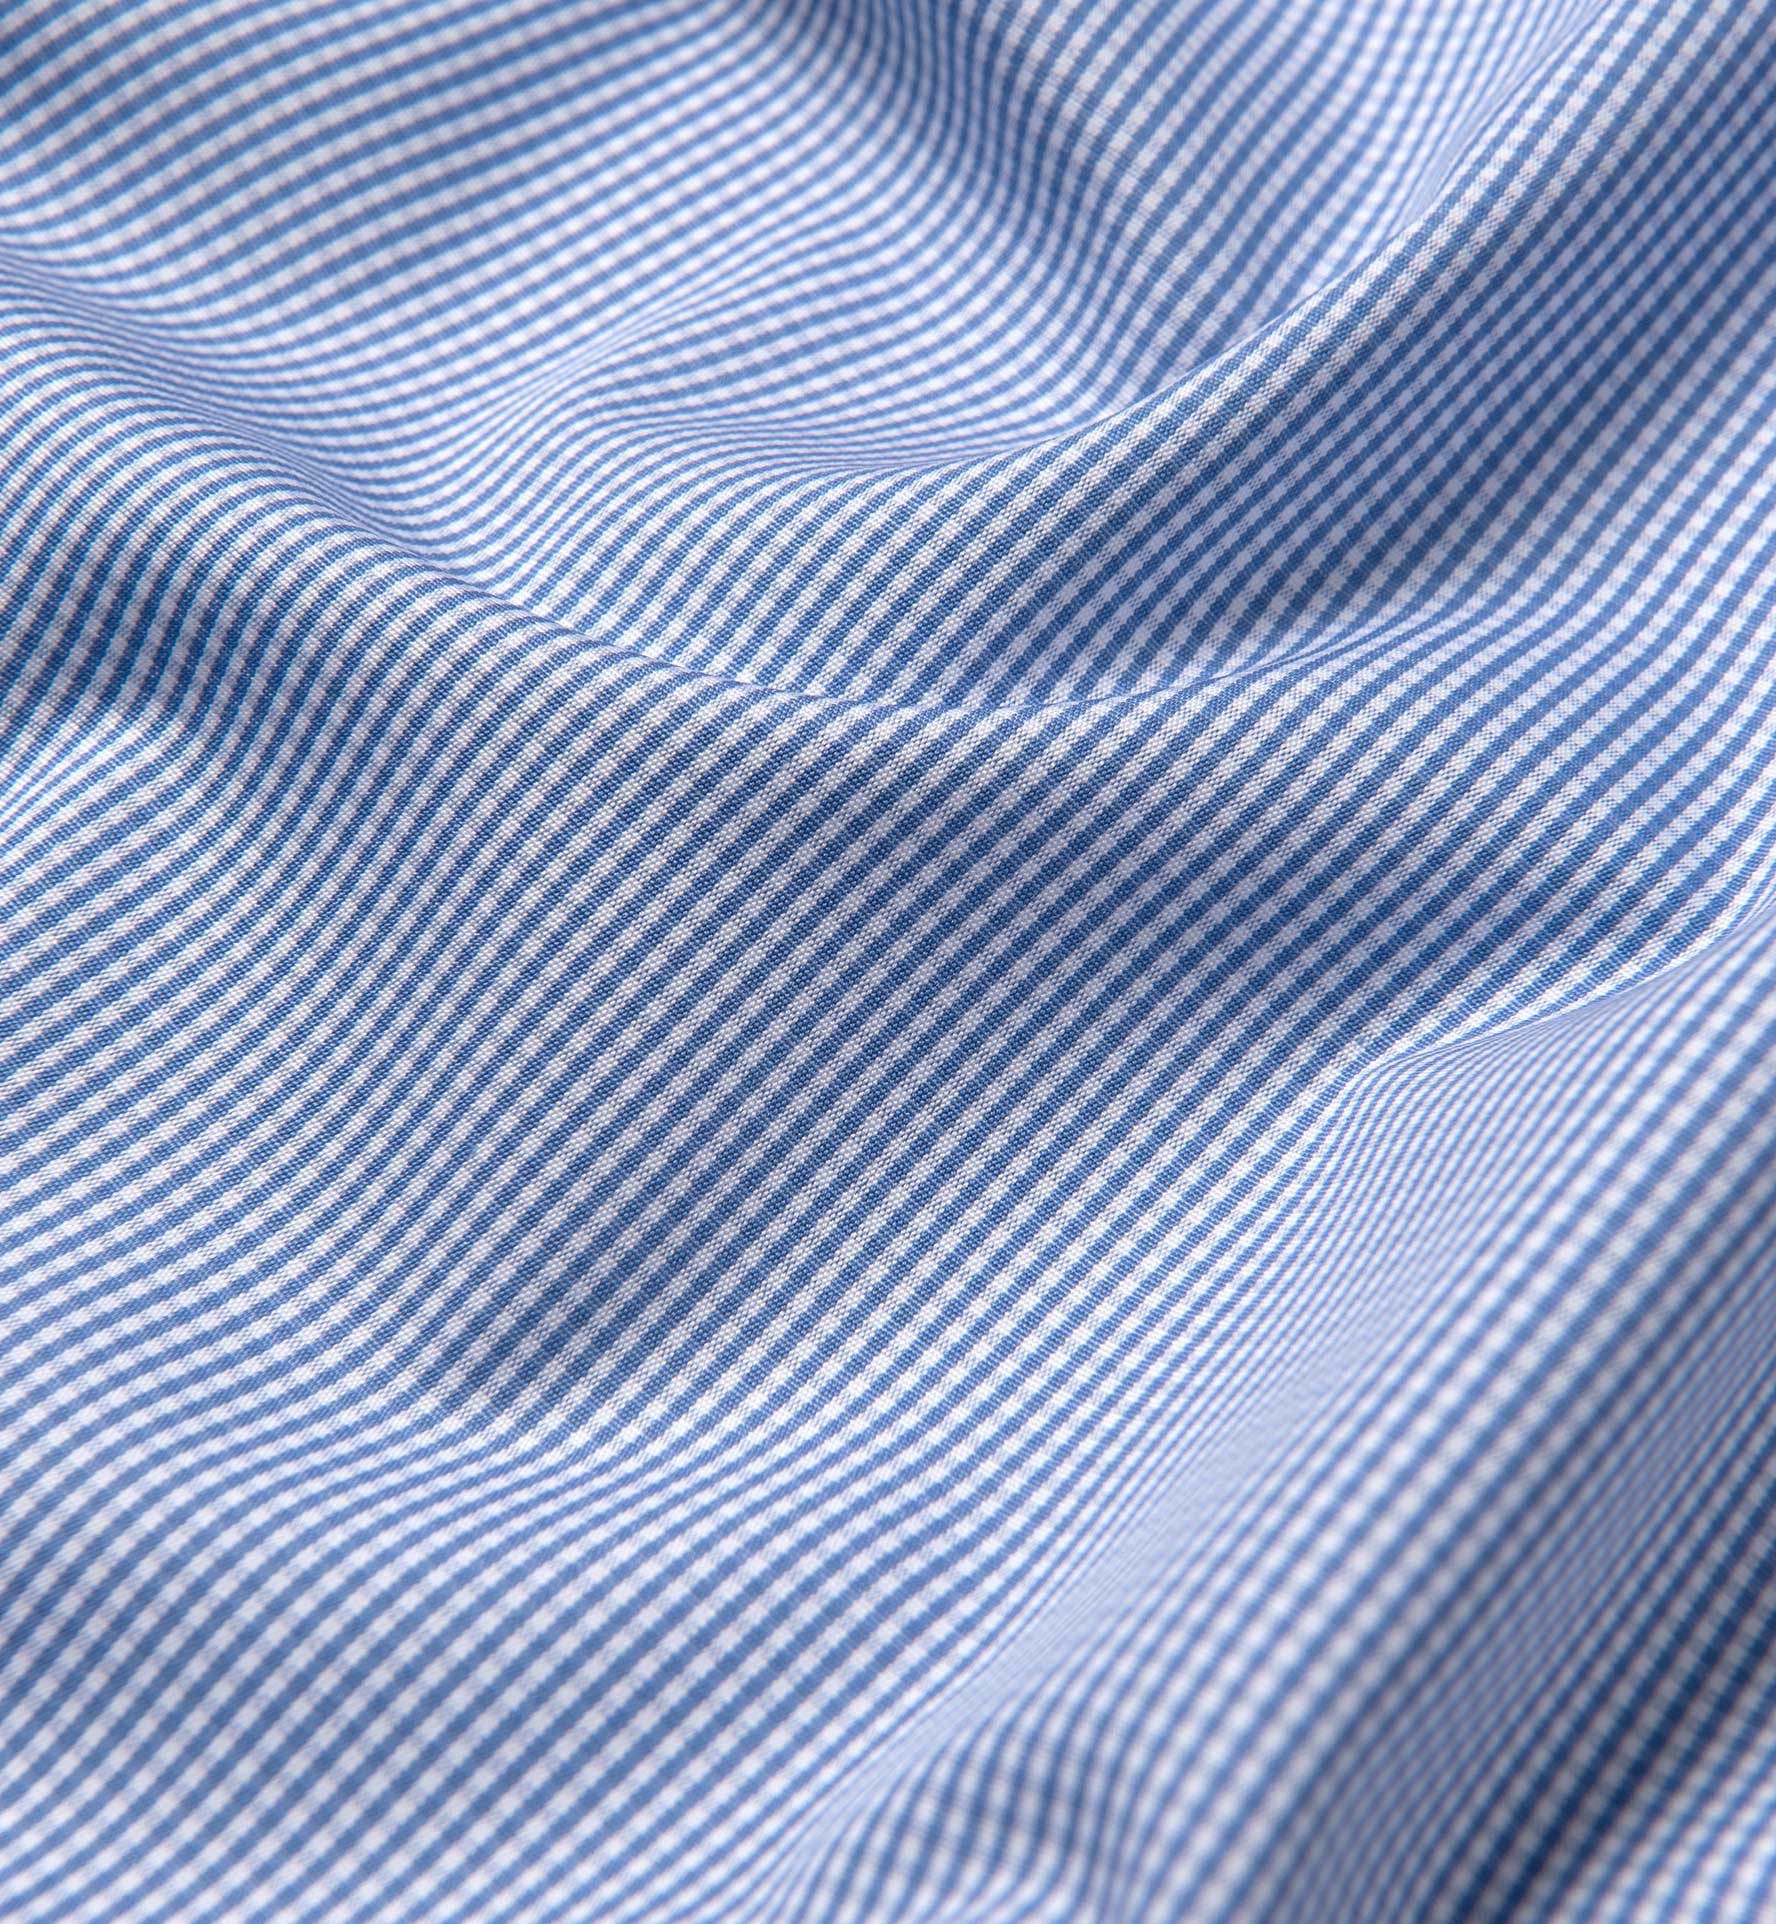 Stanton 120s Blue Mini Gingham Shirts by Proper Cloth